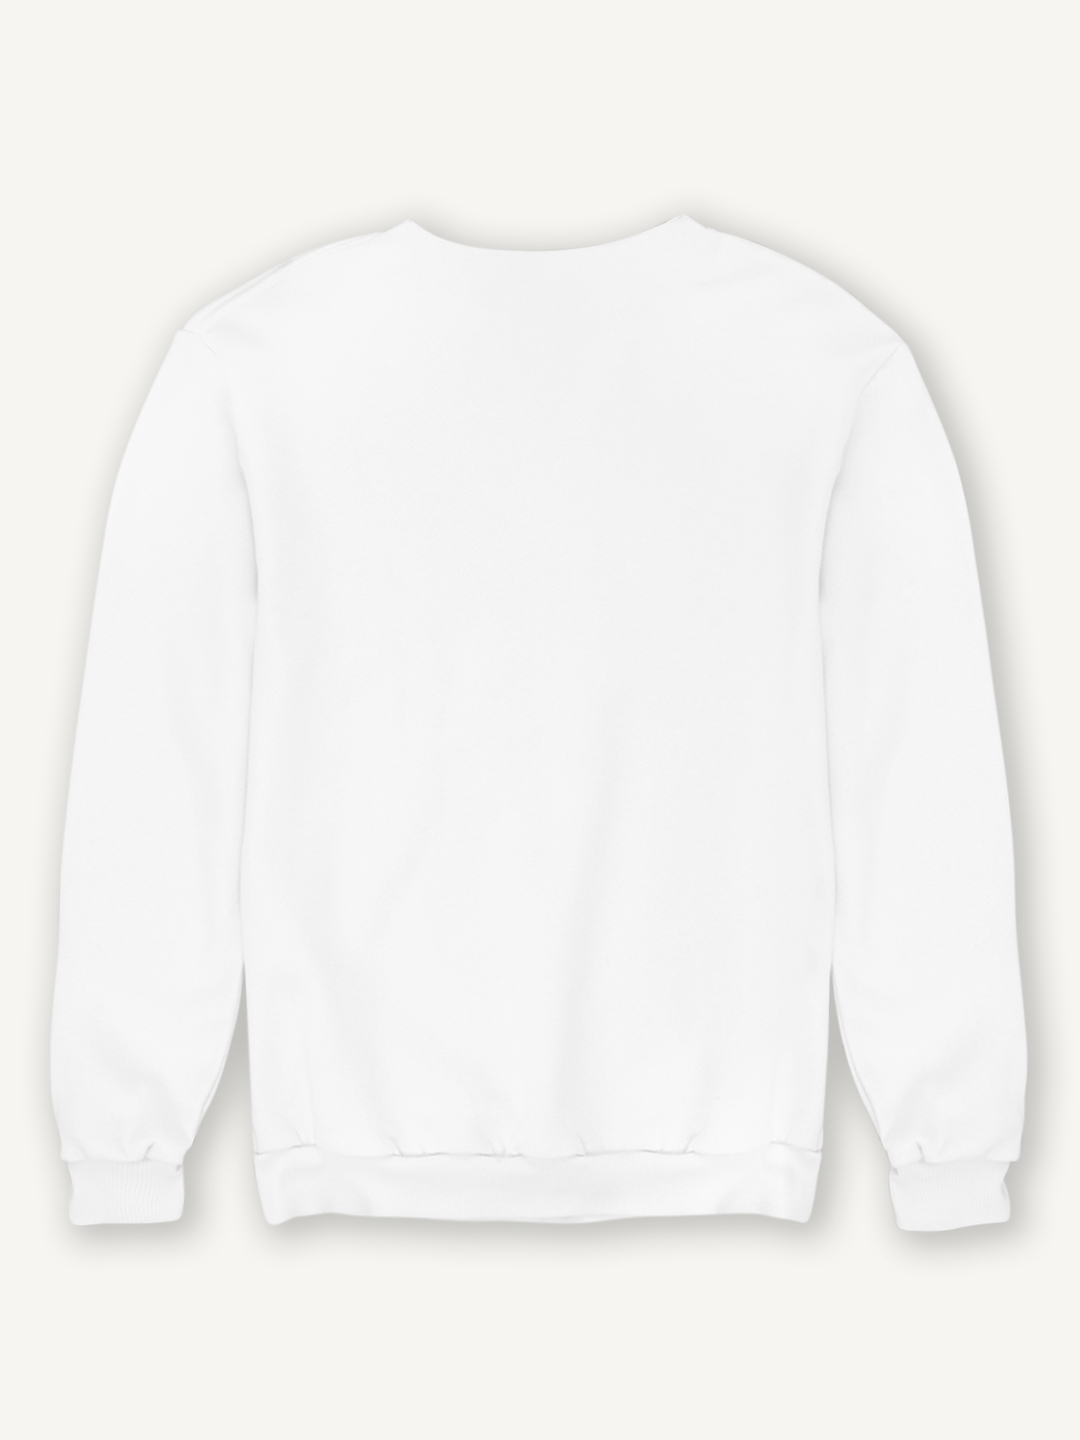 Christmas Cap White Unisex Cotton Sweatshirt